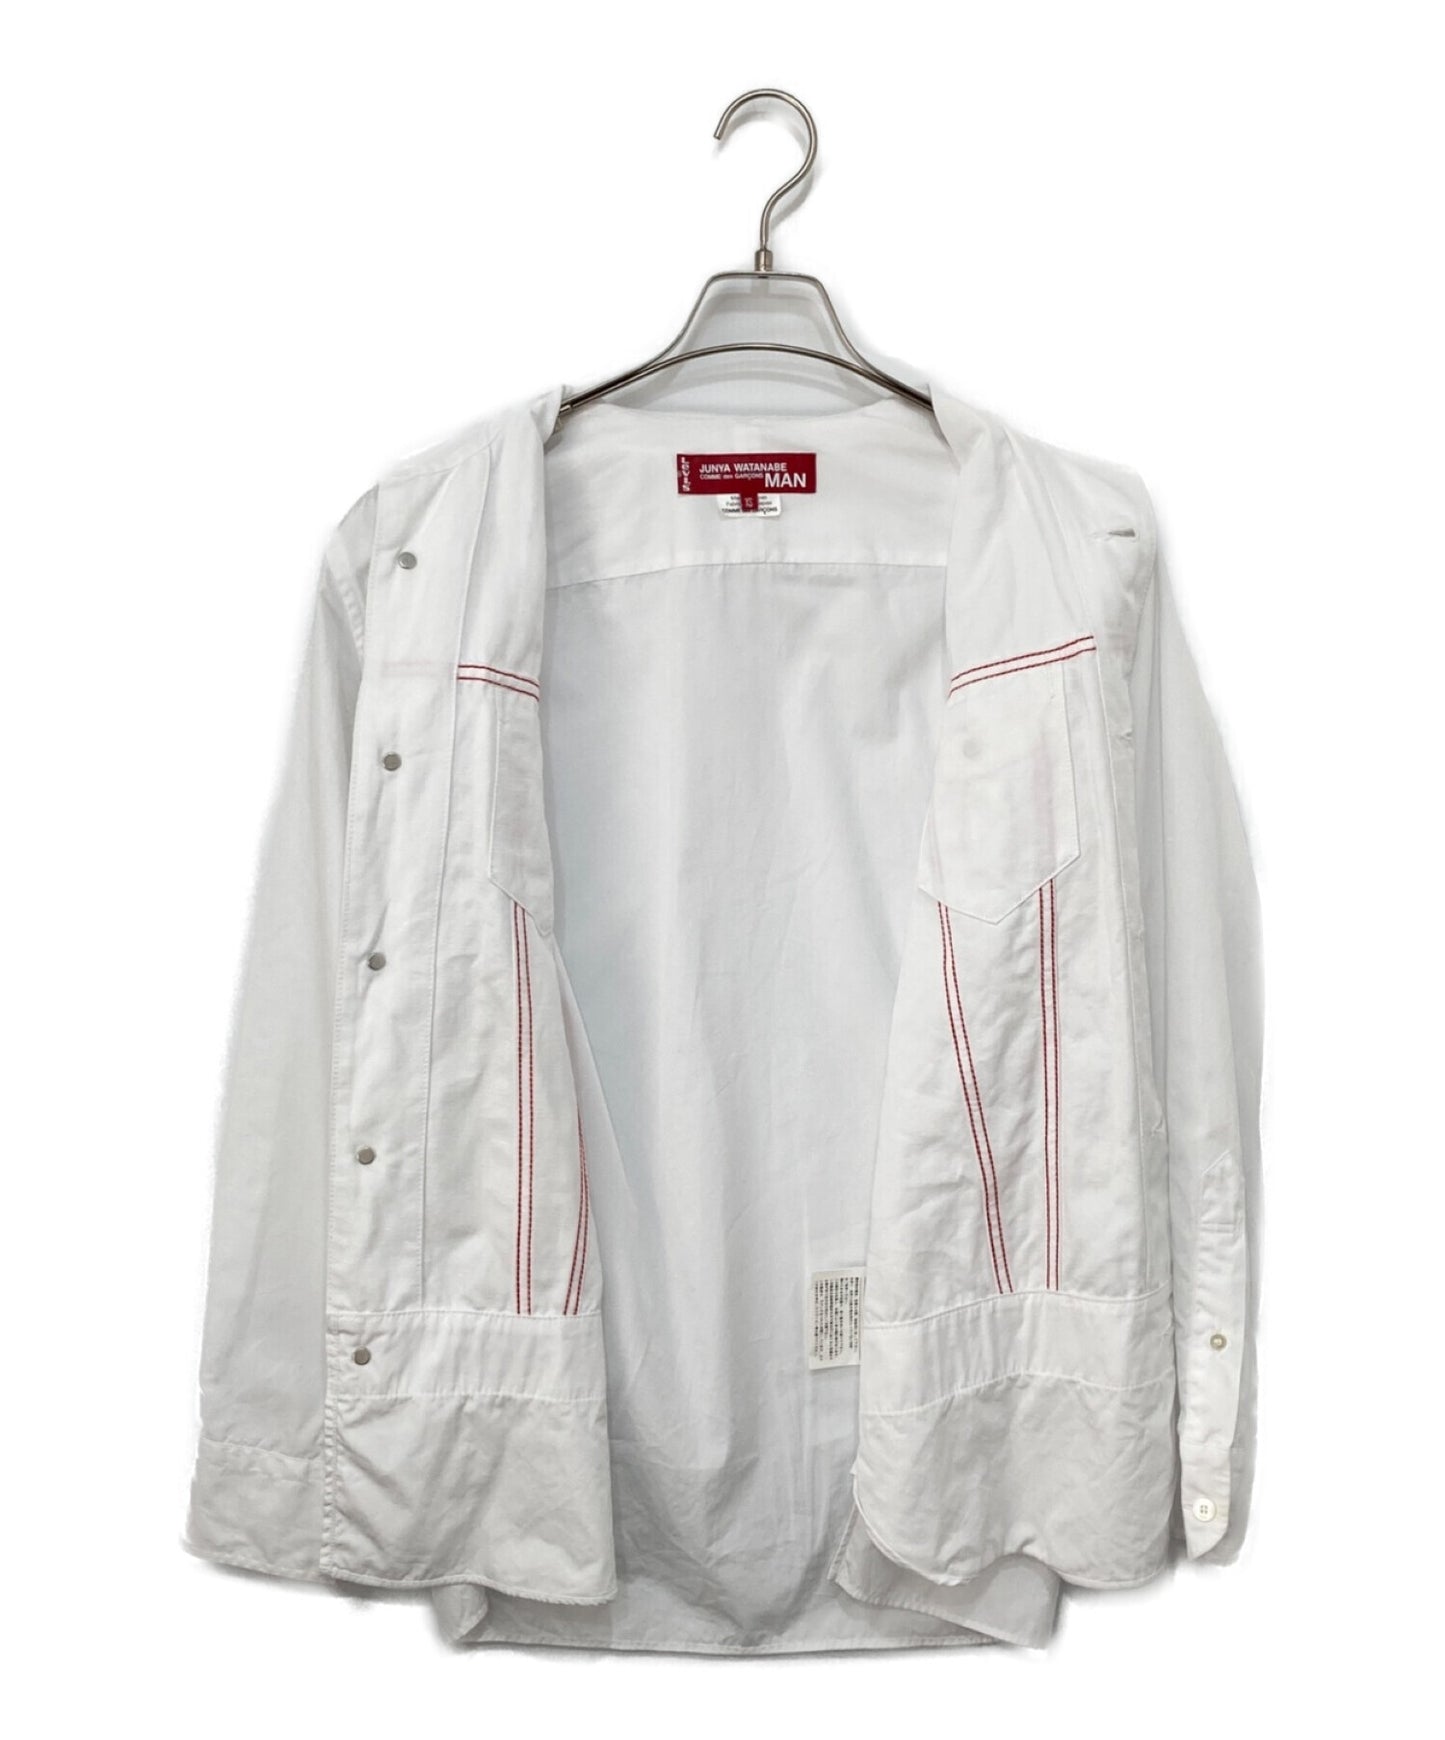 Comme des Garcons Junya Watanabe Man 20SS 재킷 도킹 셔츠 WE-B002